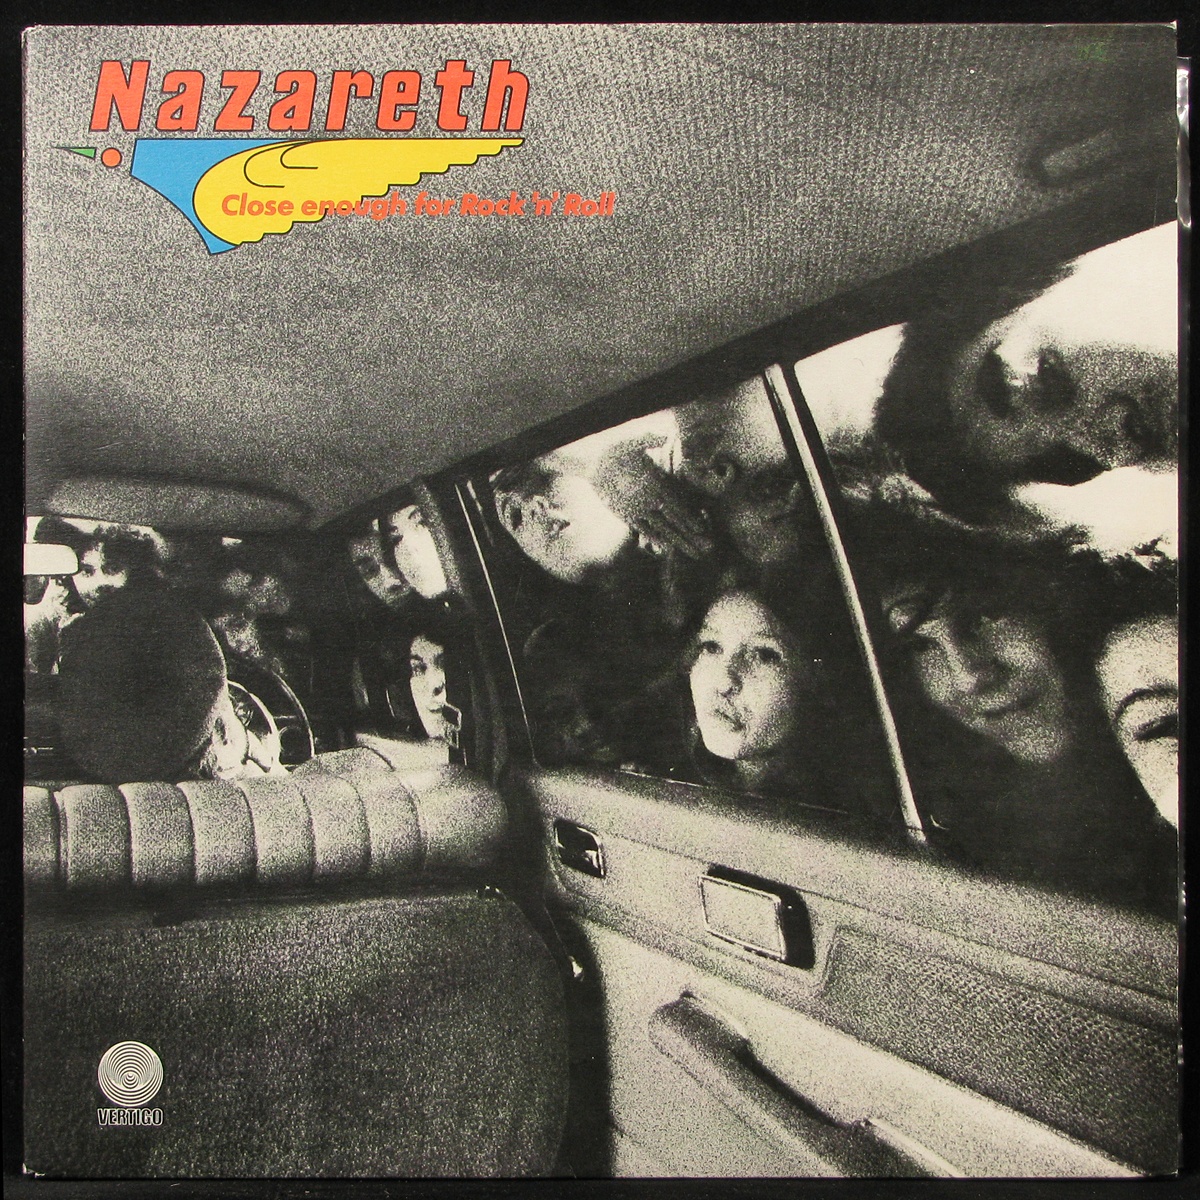 LP Nazareth — Close Enough For Rock 'N' Roll фото